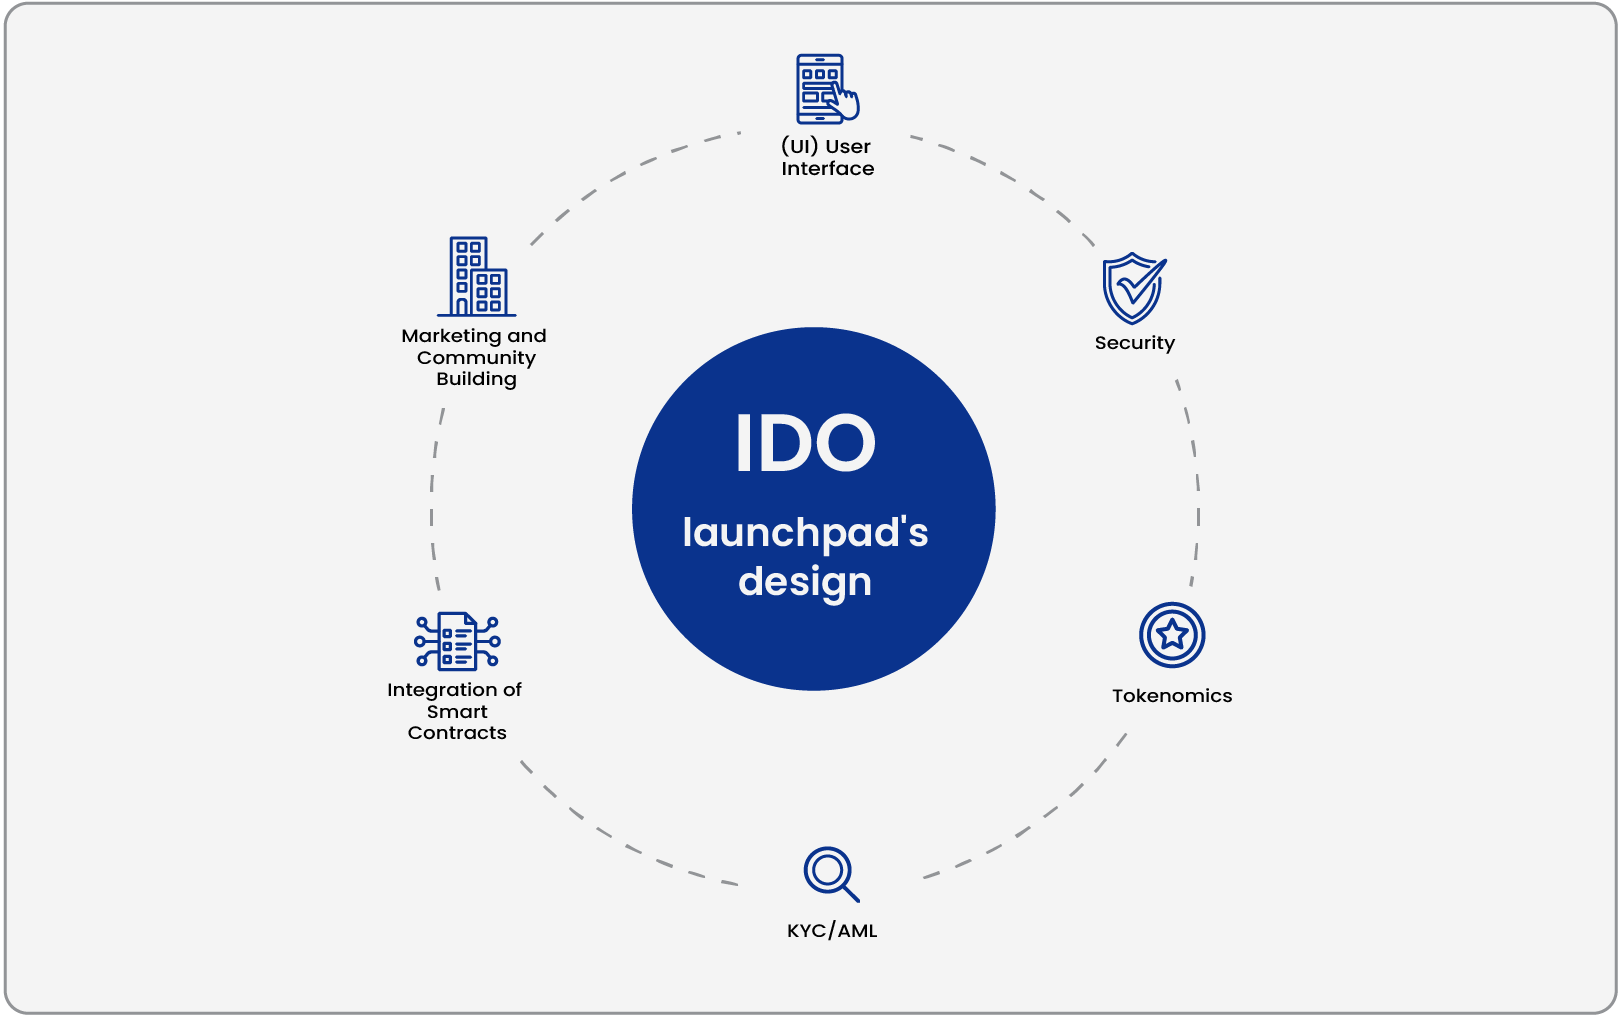 IDO Launchpad's Design